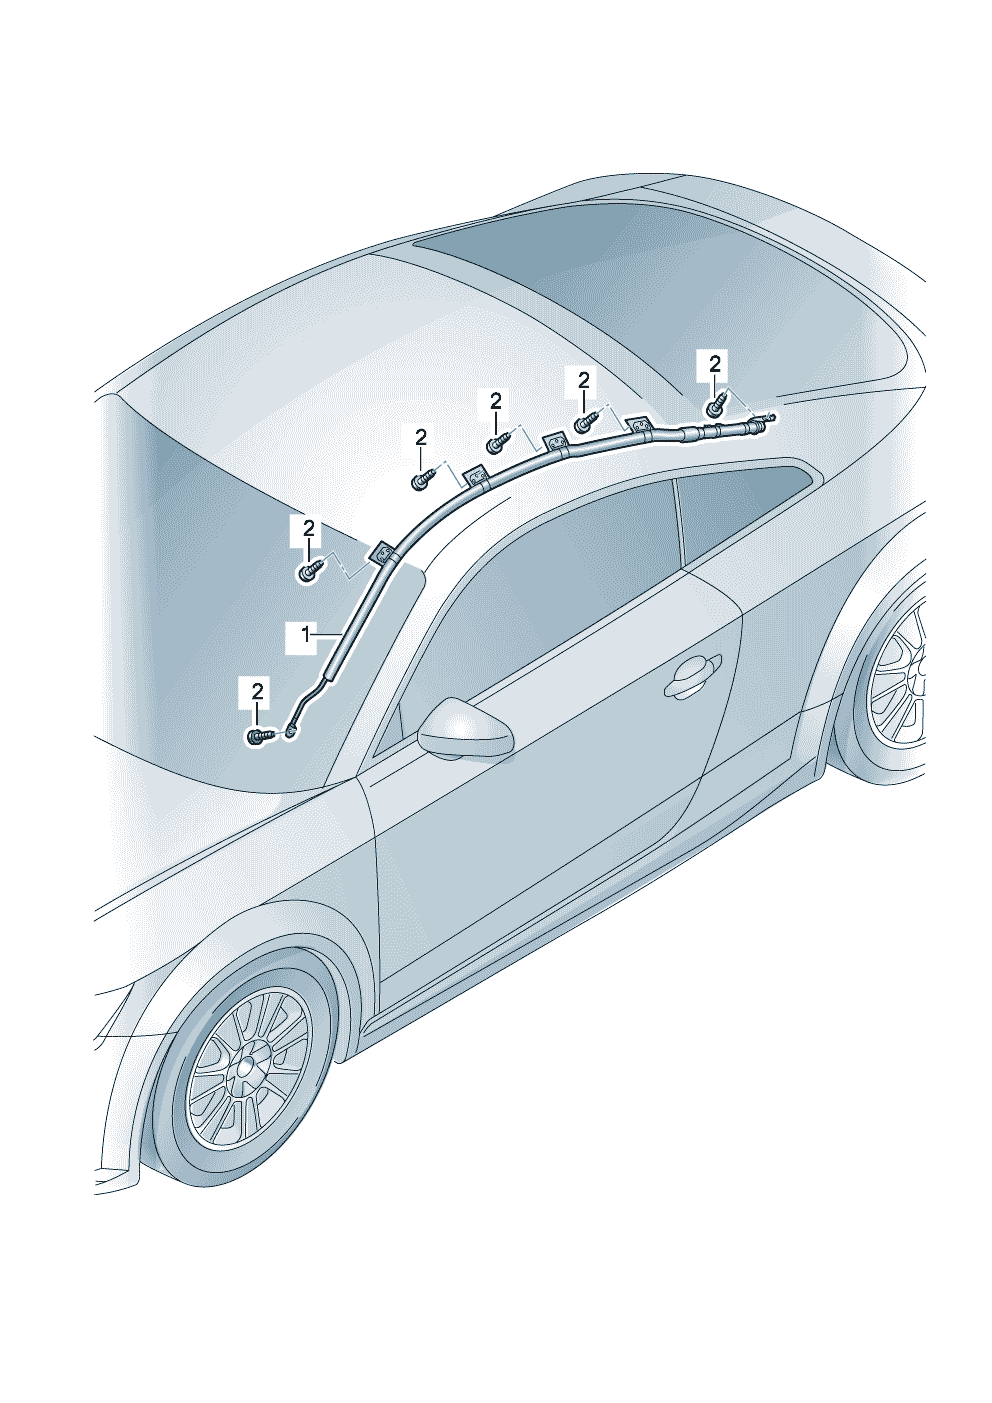 unita airbag testa<br/><br/><br/> Attenz. merce peric. <br/><br/><br/><br/>osservare guida rip.  - Audi TT/TTS Coupe/Roadster - att